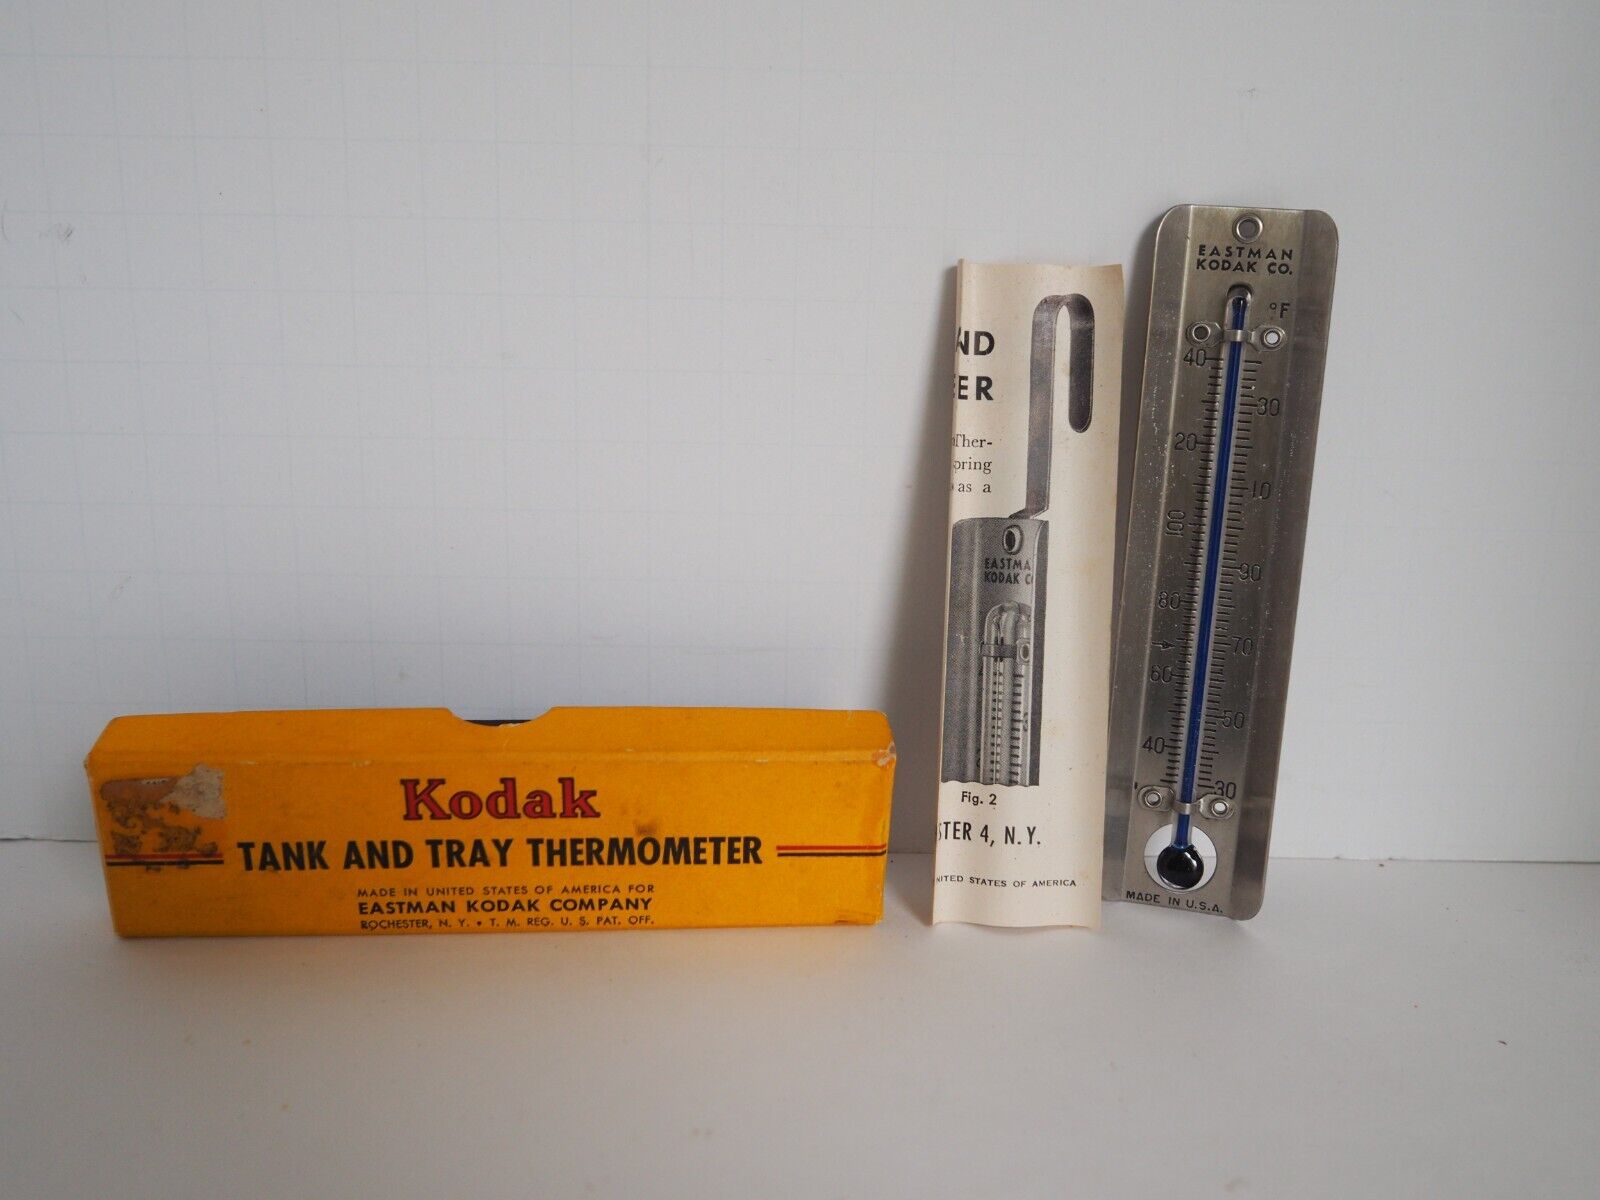 Kodak tank and tray Thermometer
